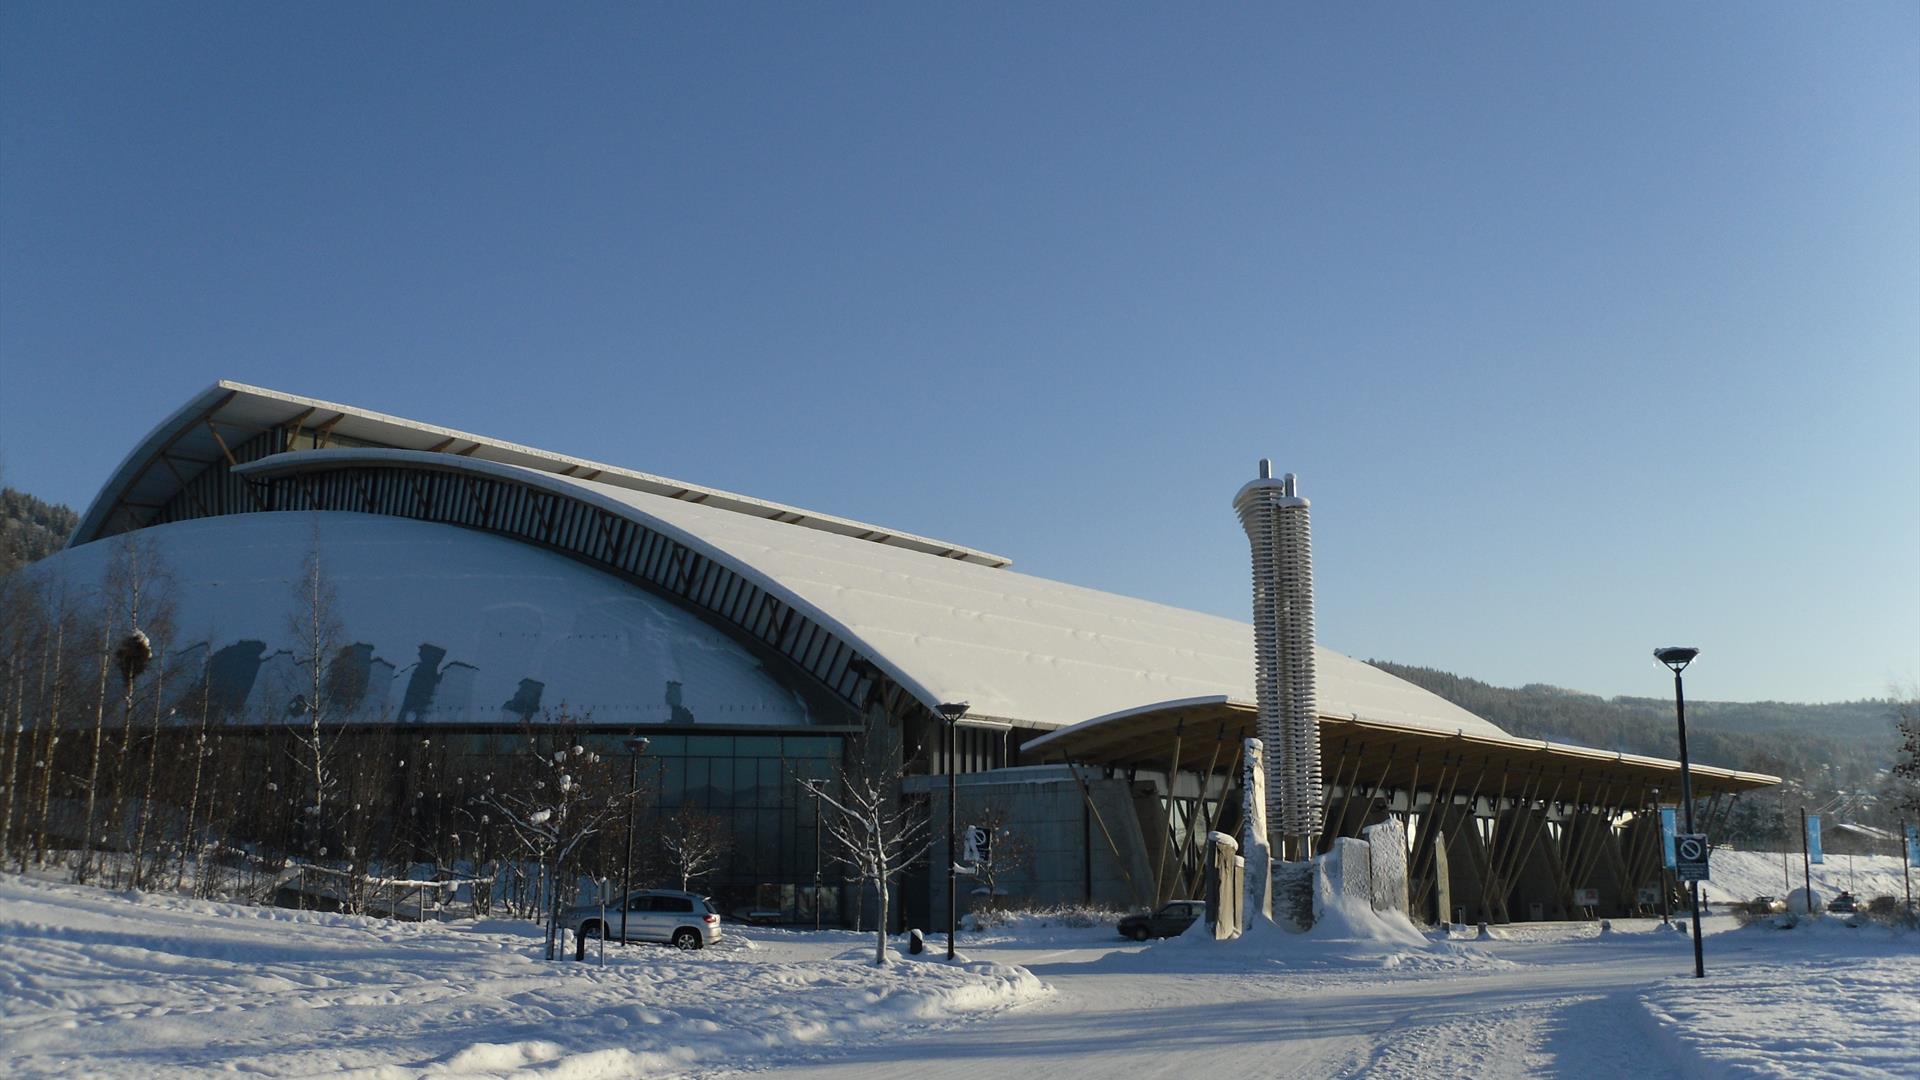 Haakons Hall vinter